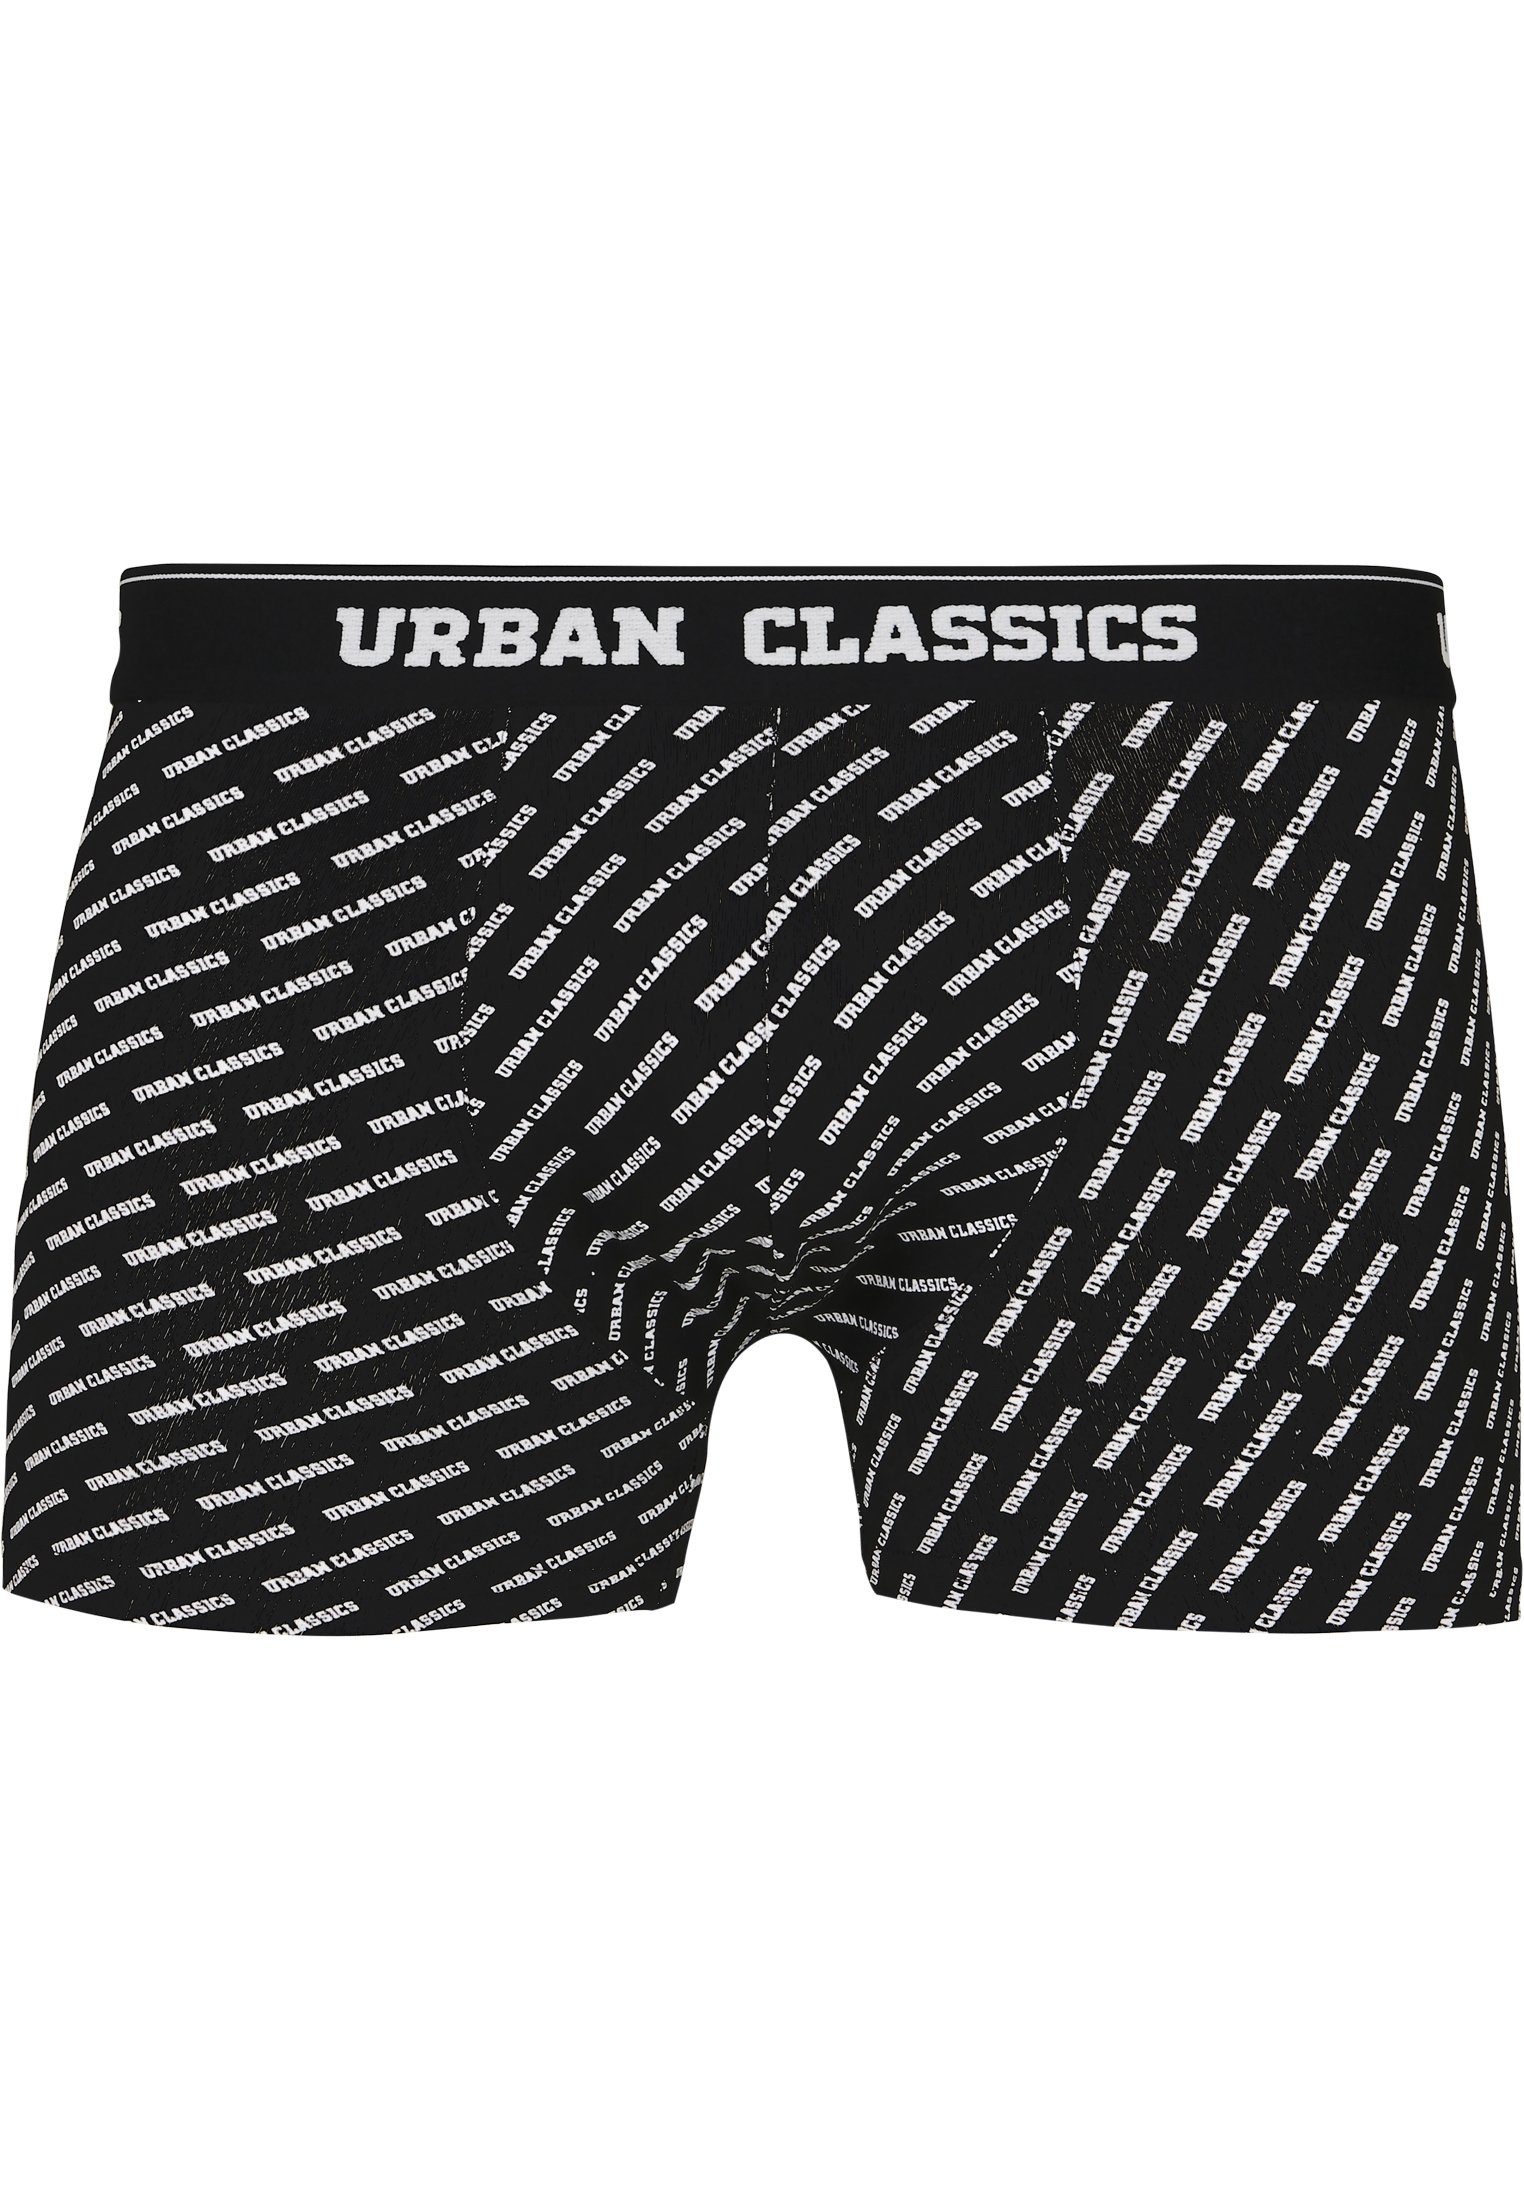 aop/black/charcoal URBAN (1-St) Shorts anchor Boxershorts 5-Pack Boxer CLASSICS Herren